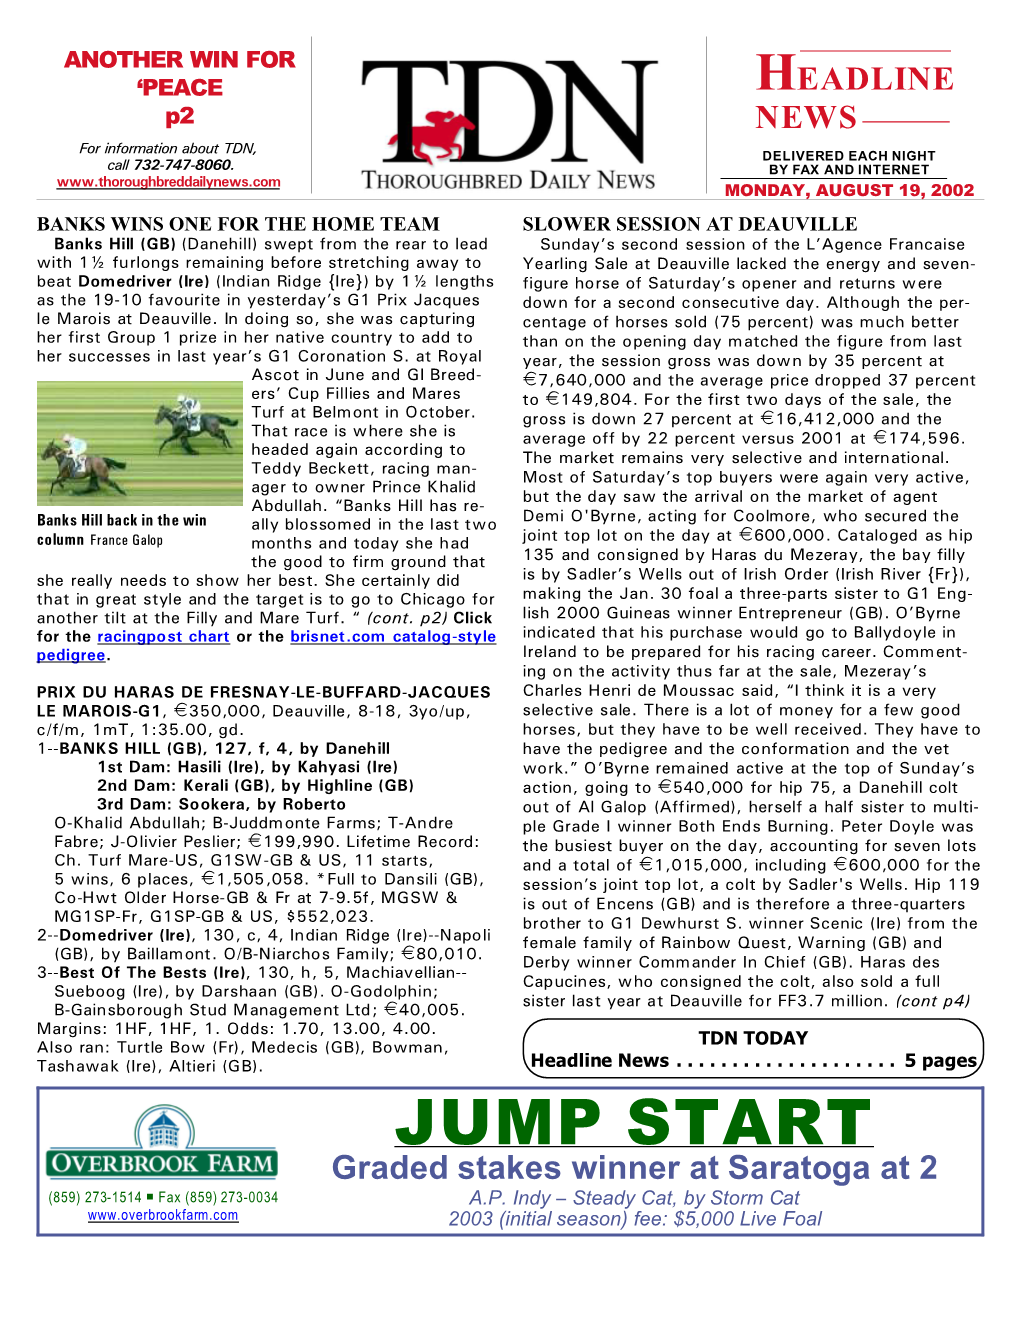 JUMP START Graded Stakes Winner at Saratoga at 2 (859) 273-1514 P Fax (859) 273-0034 A.P